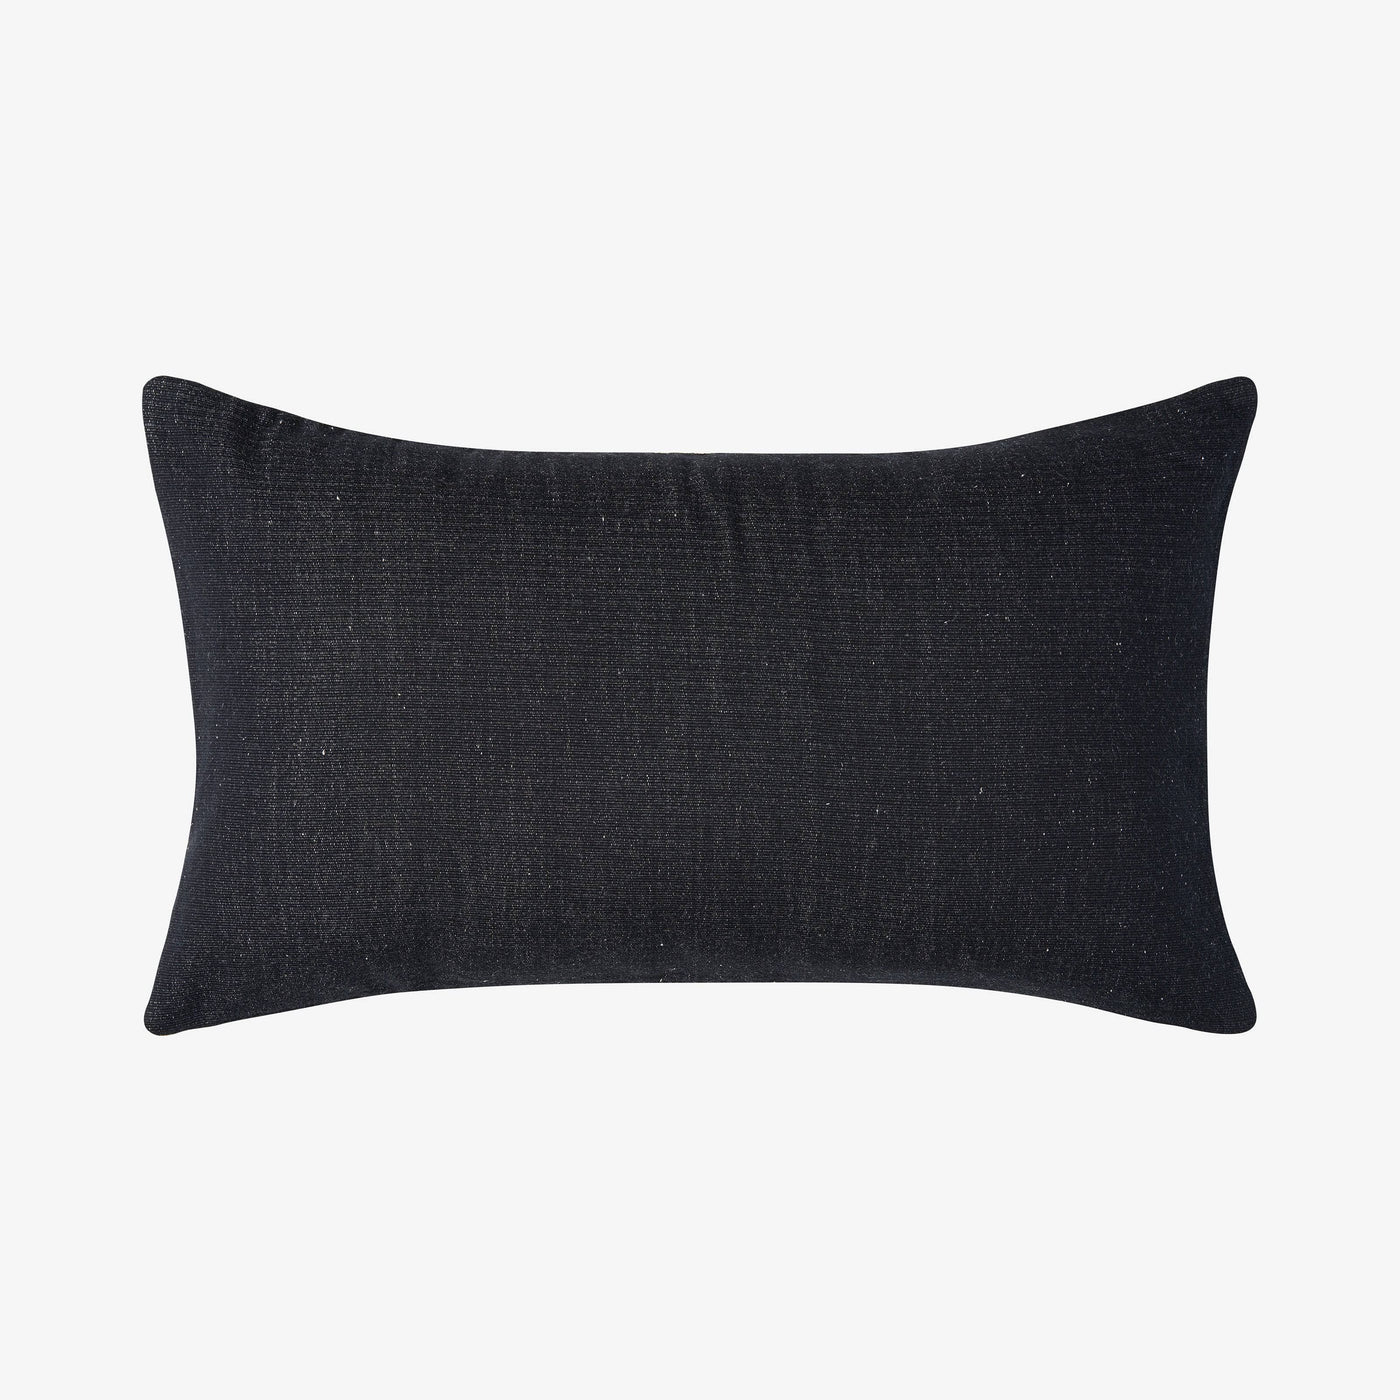 Dumnoni Cushion Cover, Dark Green - Beige, 35x55 cm Cushion Covers sazy.com